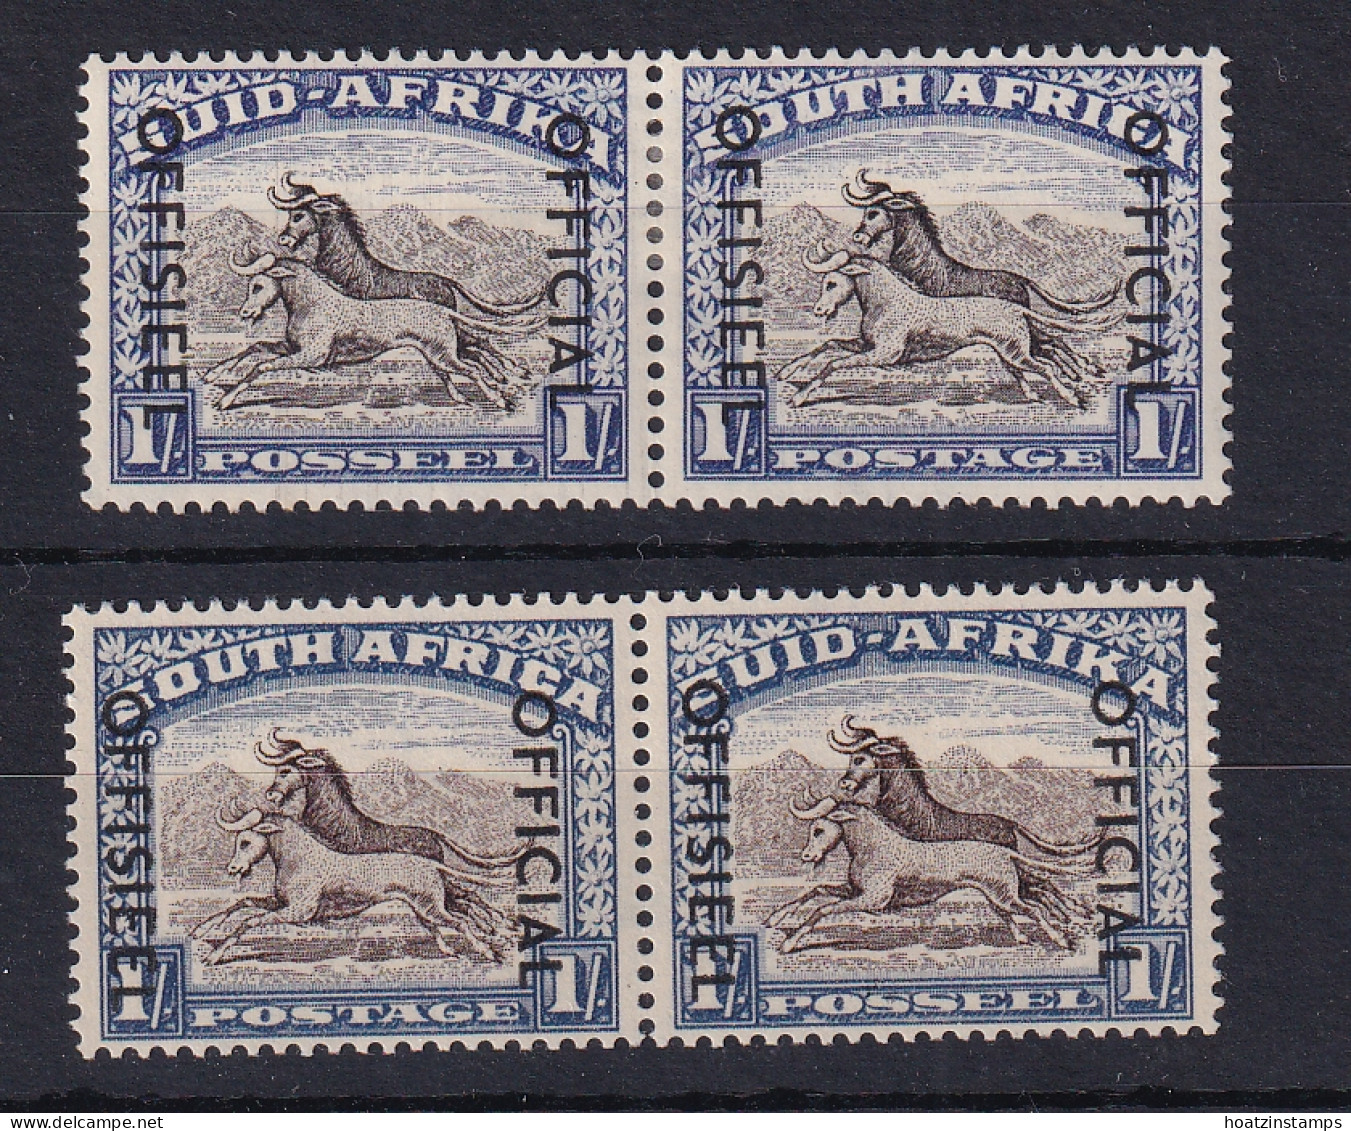 South Africa: 1950/54   Official - Wildebeest   SG O47 / O47a   1/-    MH Pair - Servizio